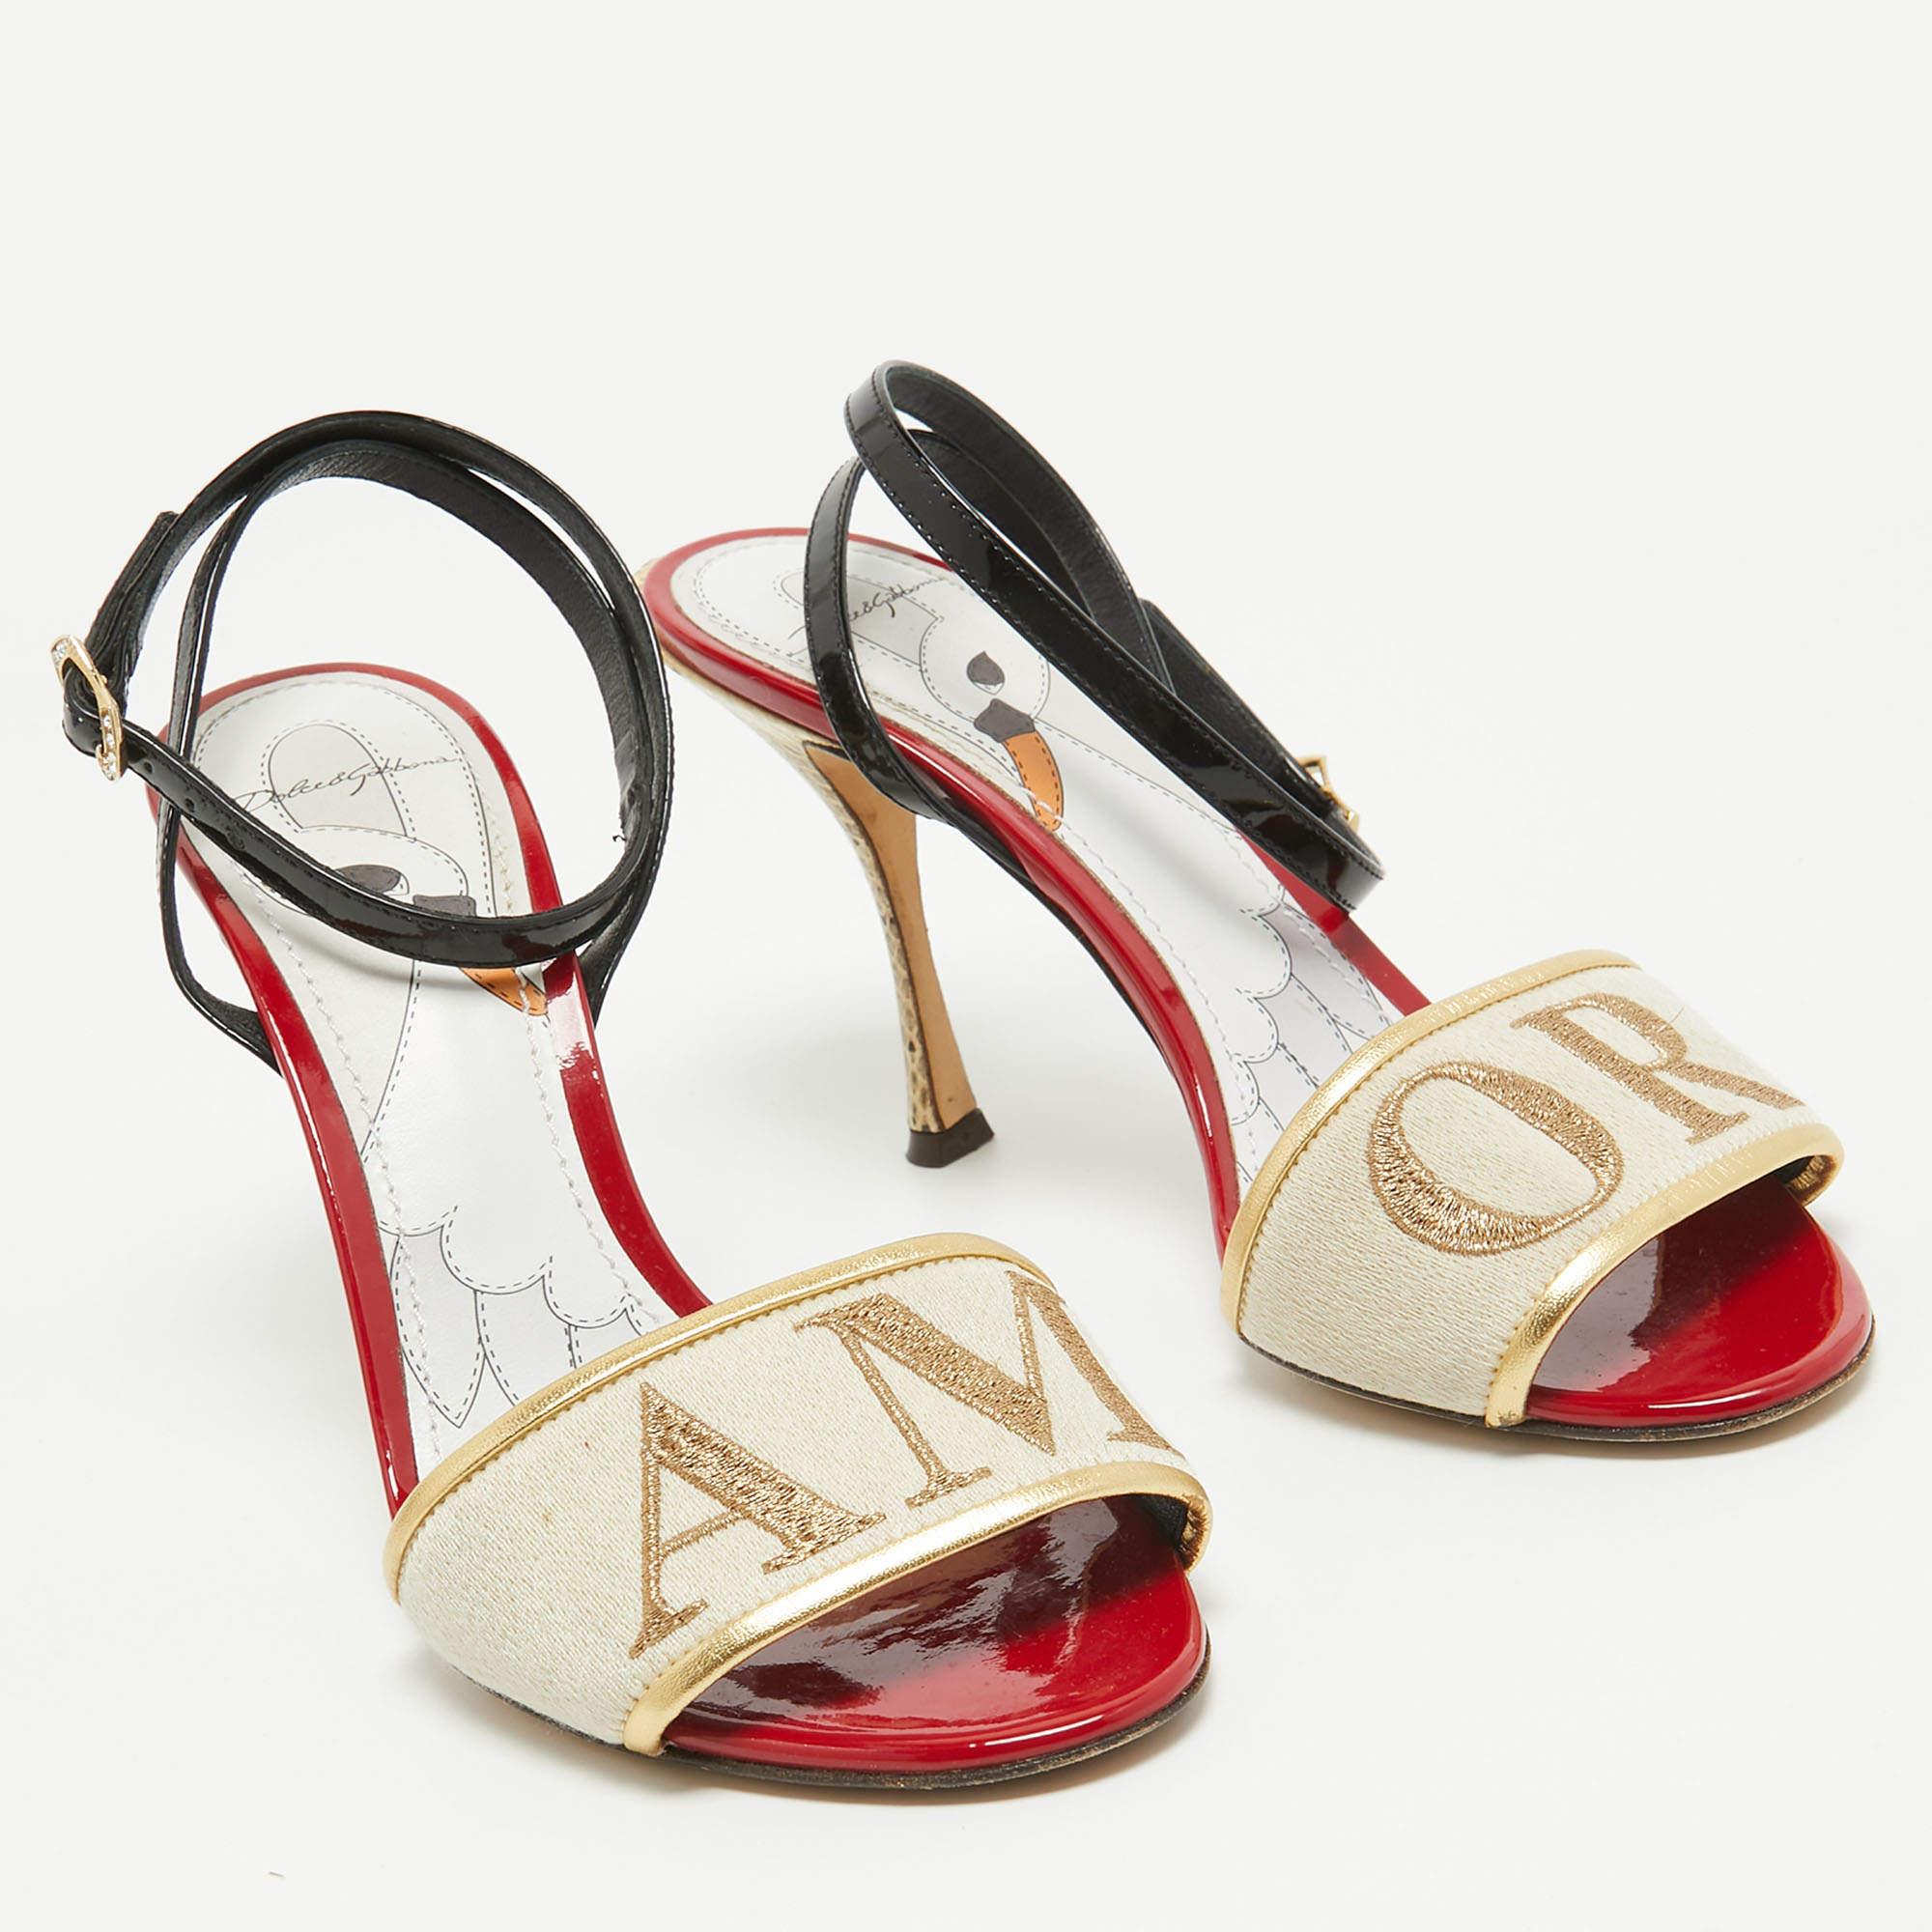 Dolce & Gabbana Multicolor Canvas Amore Ankle Strap Sandals Size 37.5 In Good Condition For Sale In Dubai, Al Qouz 2